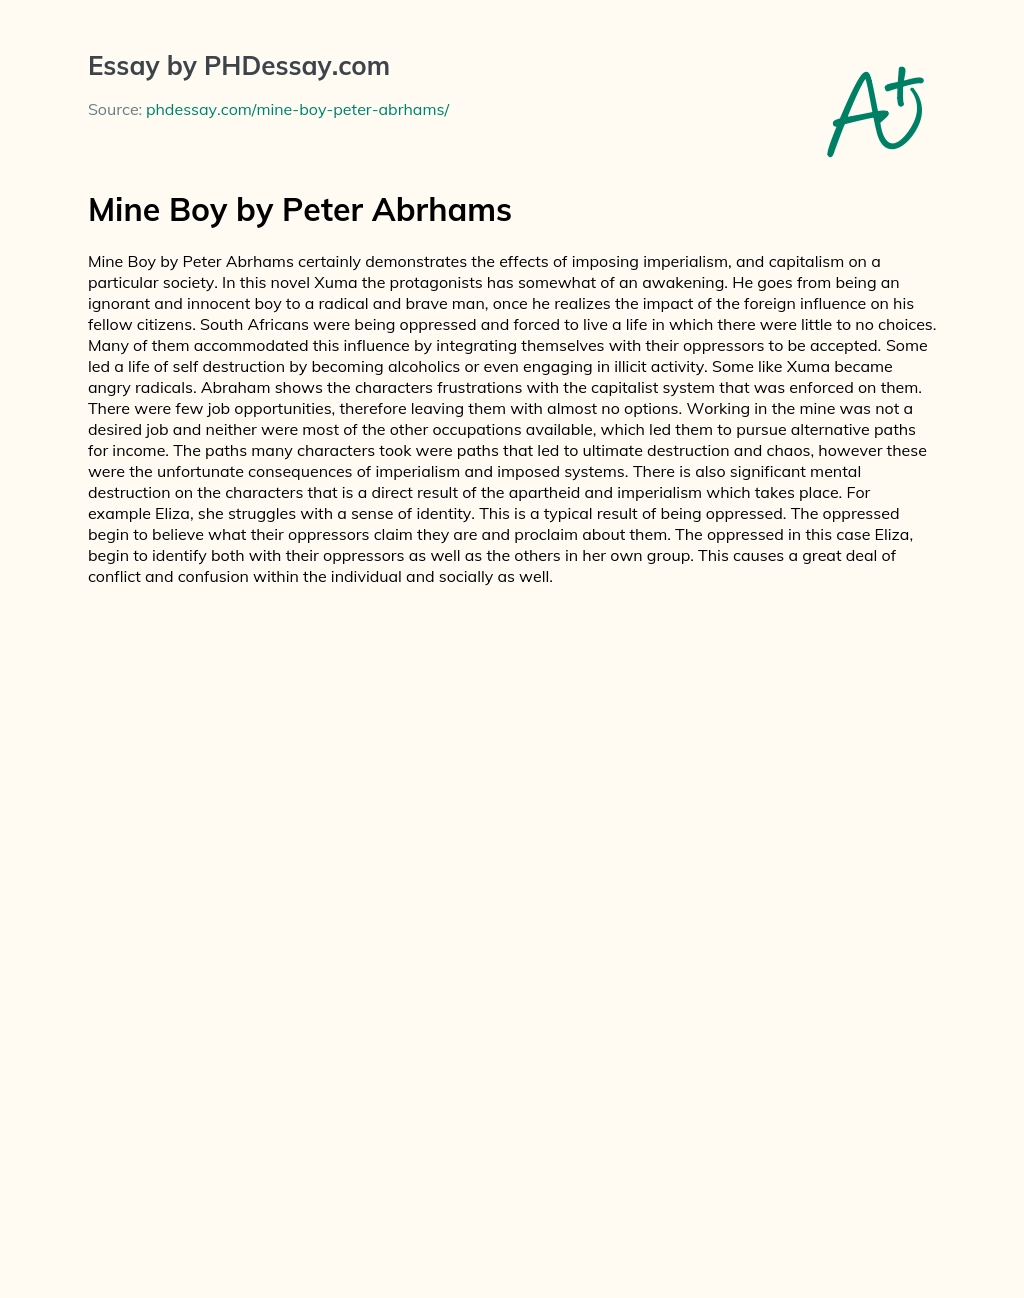 Mine Boy by Peter Abrhams essay